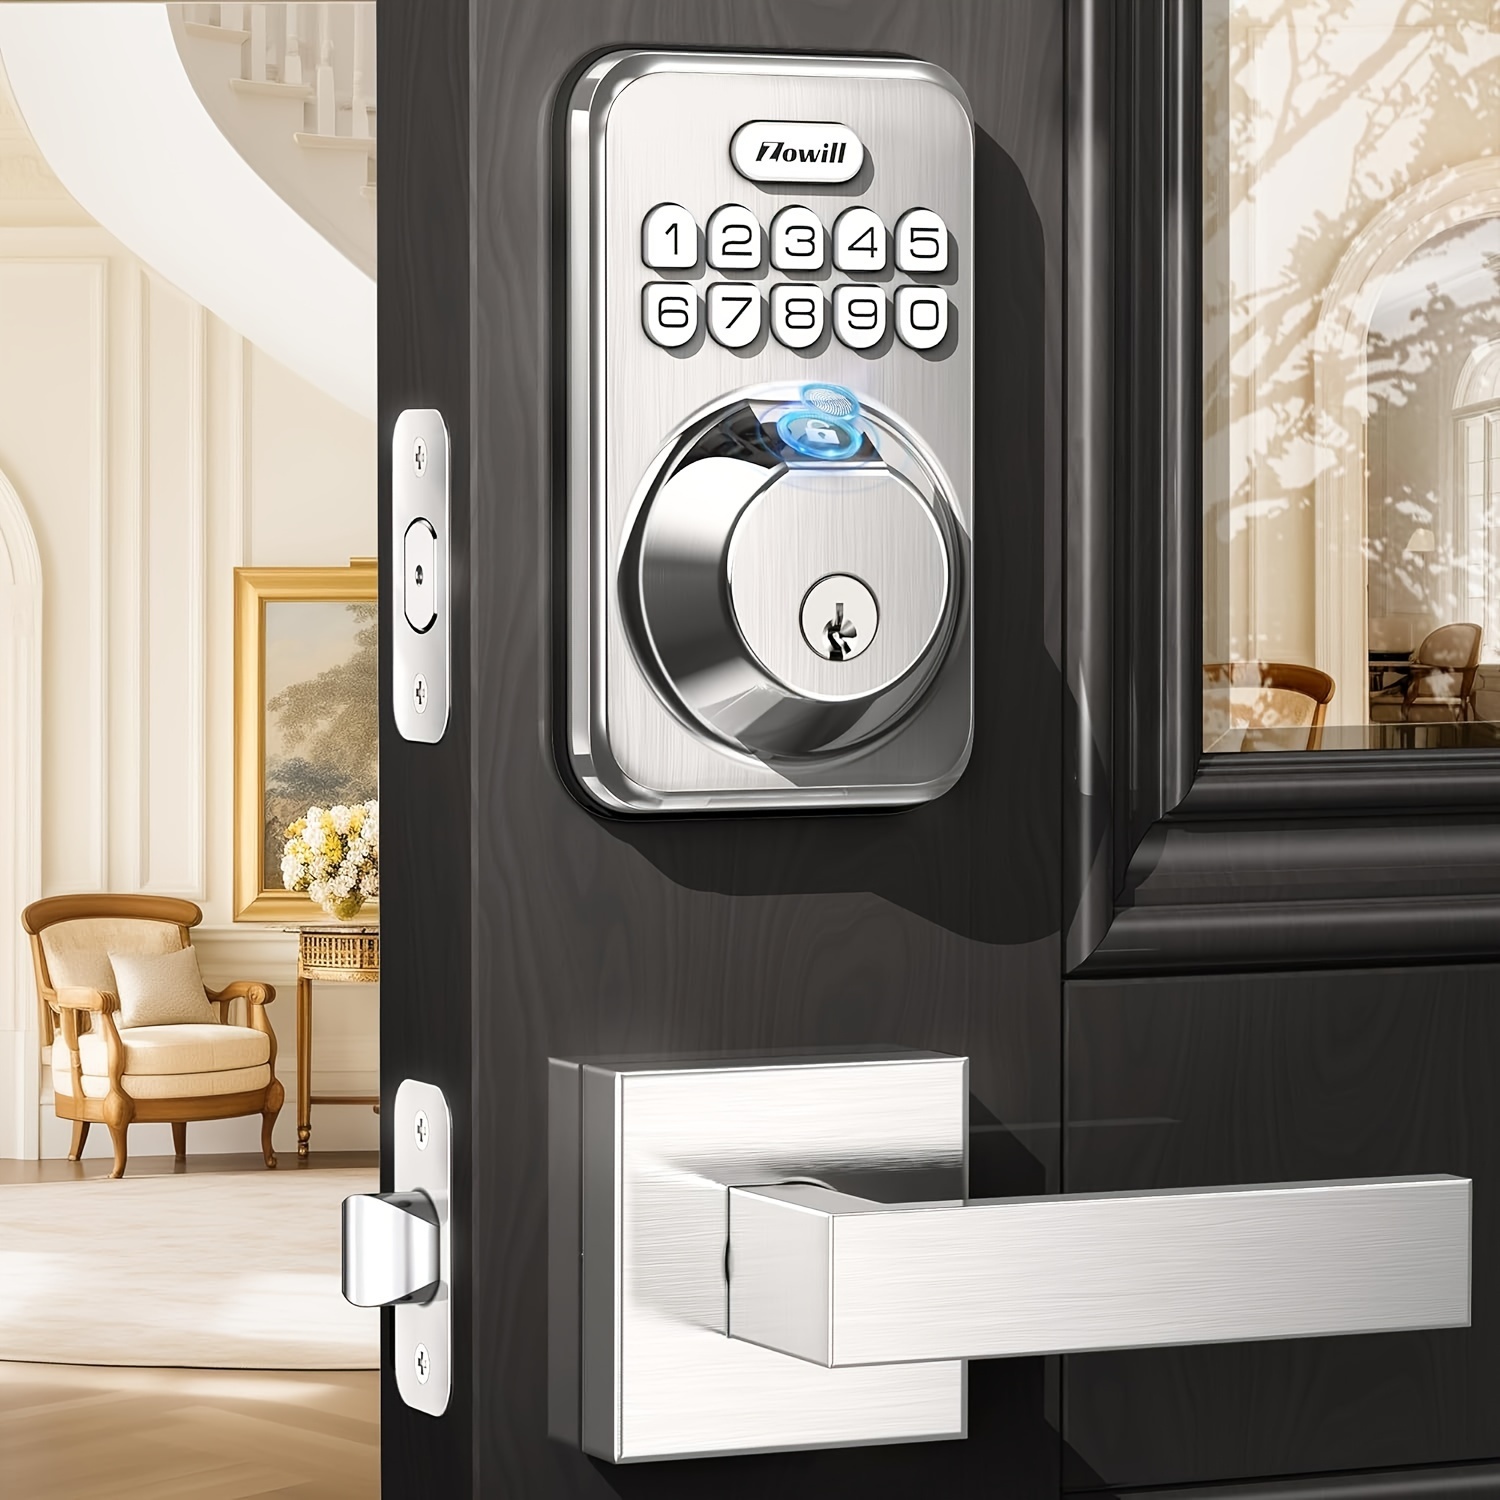 

Fingerprint Door Lock, Keypad Door Lock With 2 Handles, Keyless Entry, Auto Lock, Anti-peeping Password, Electronic Smart Deadbolt, Front Door Handle Sets For Homes, Apartments, Easy To Install